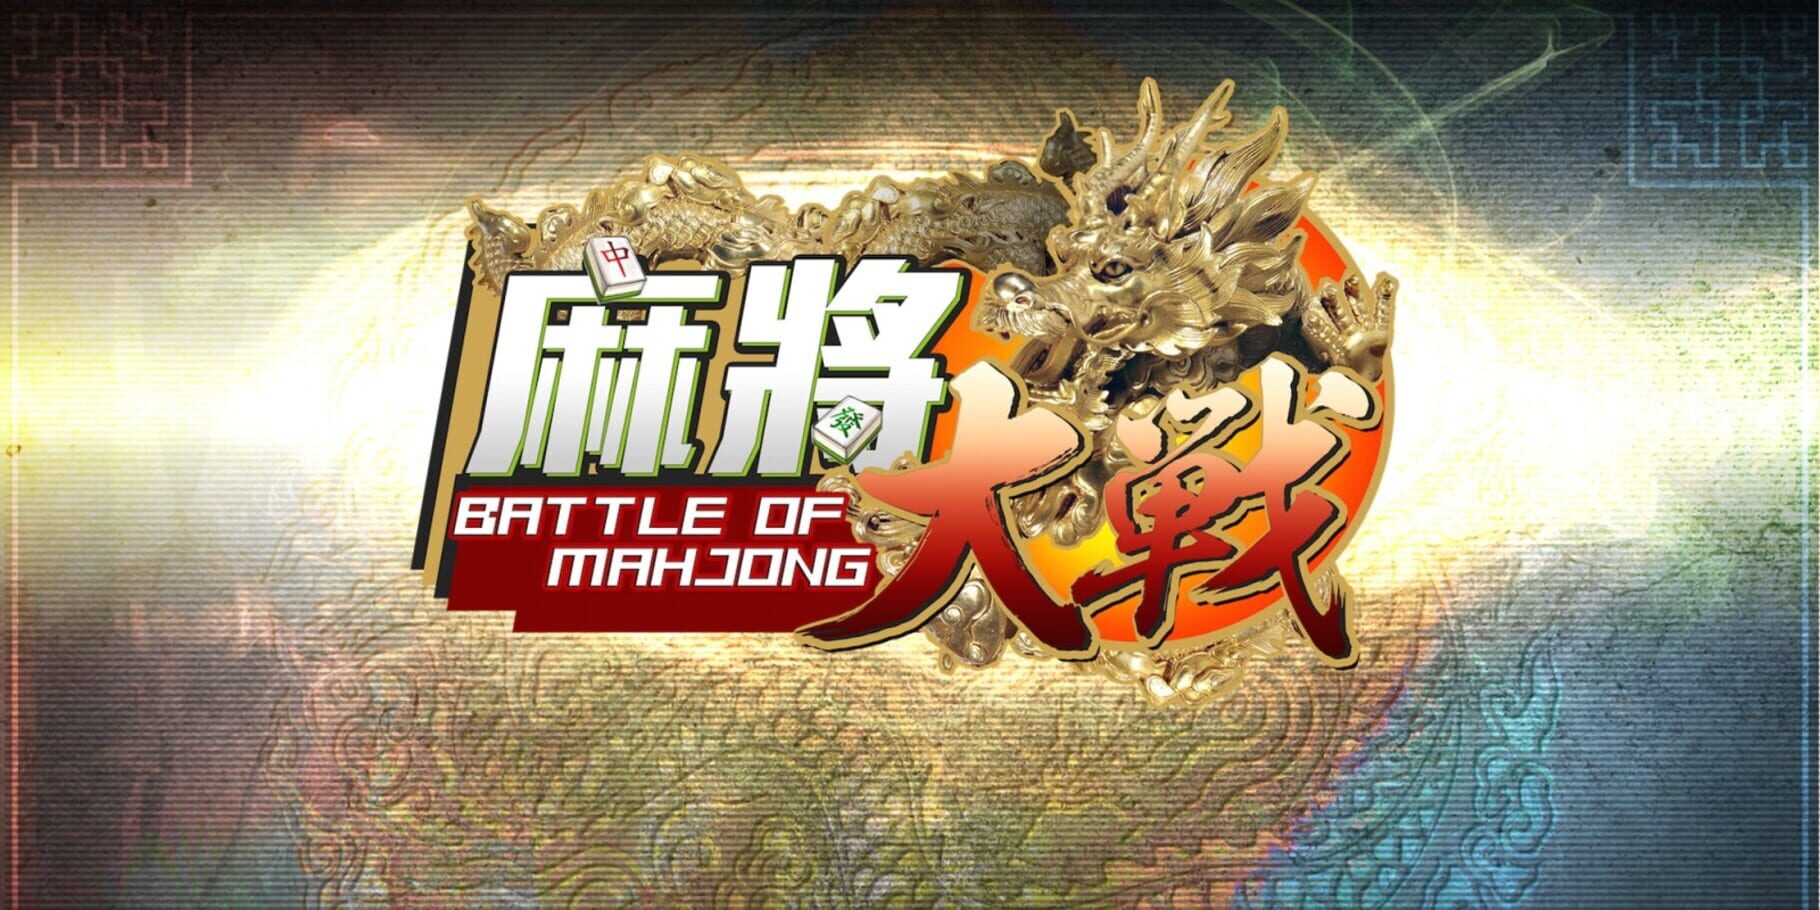 The Battle of Mahjong artwork